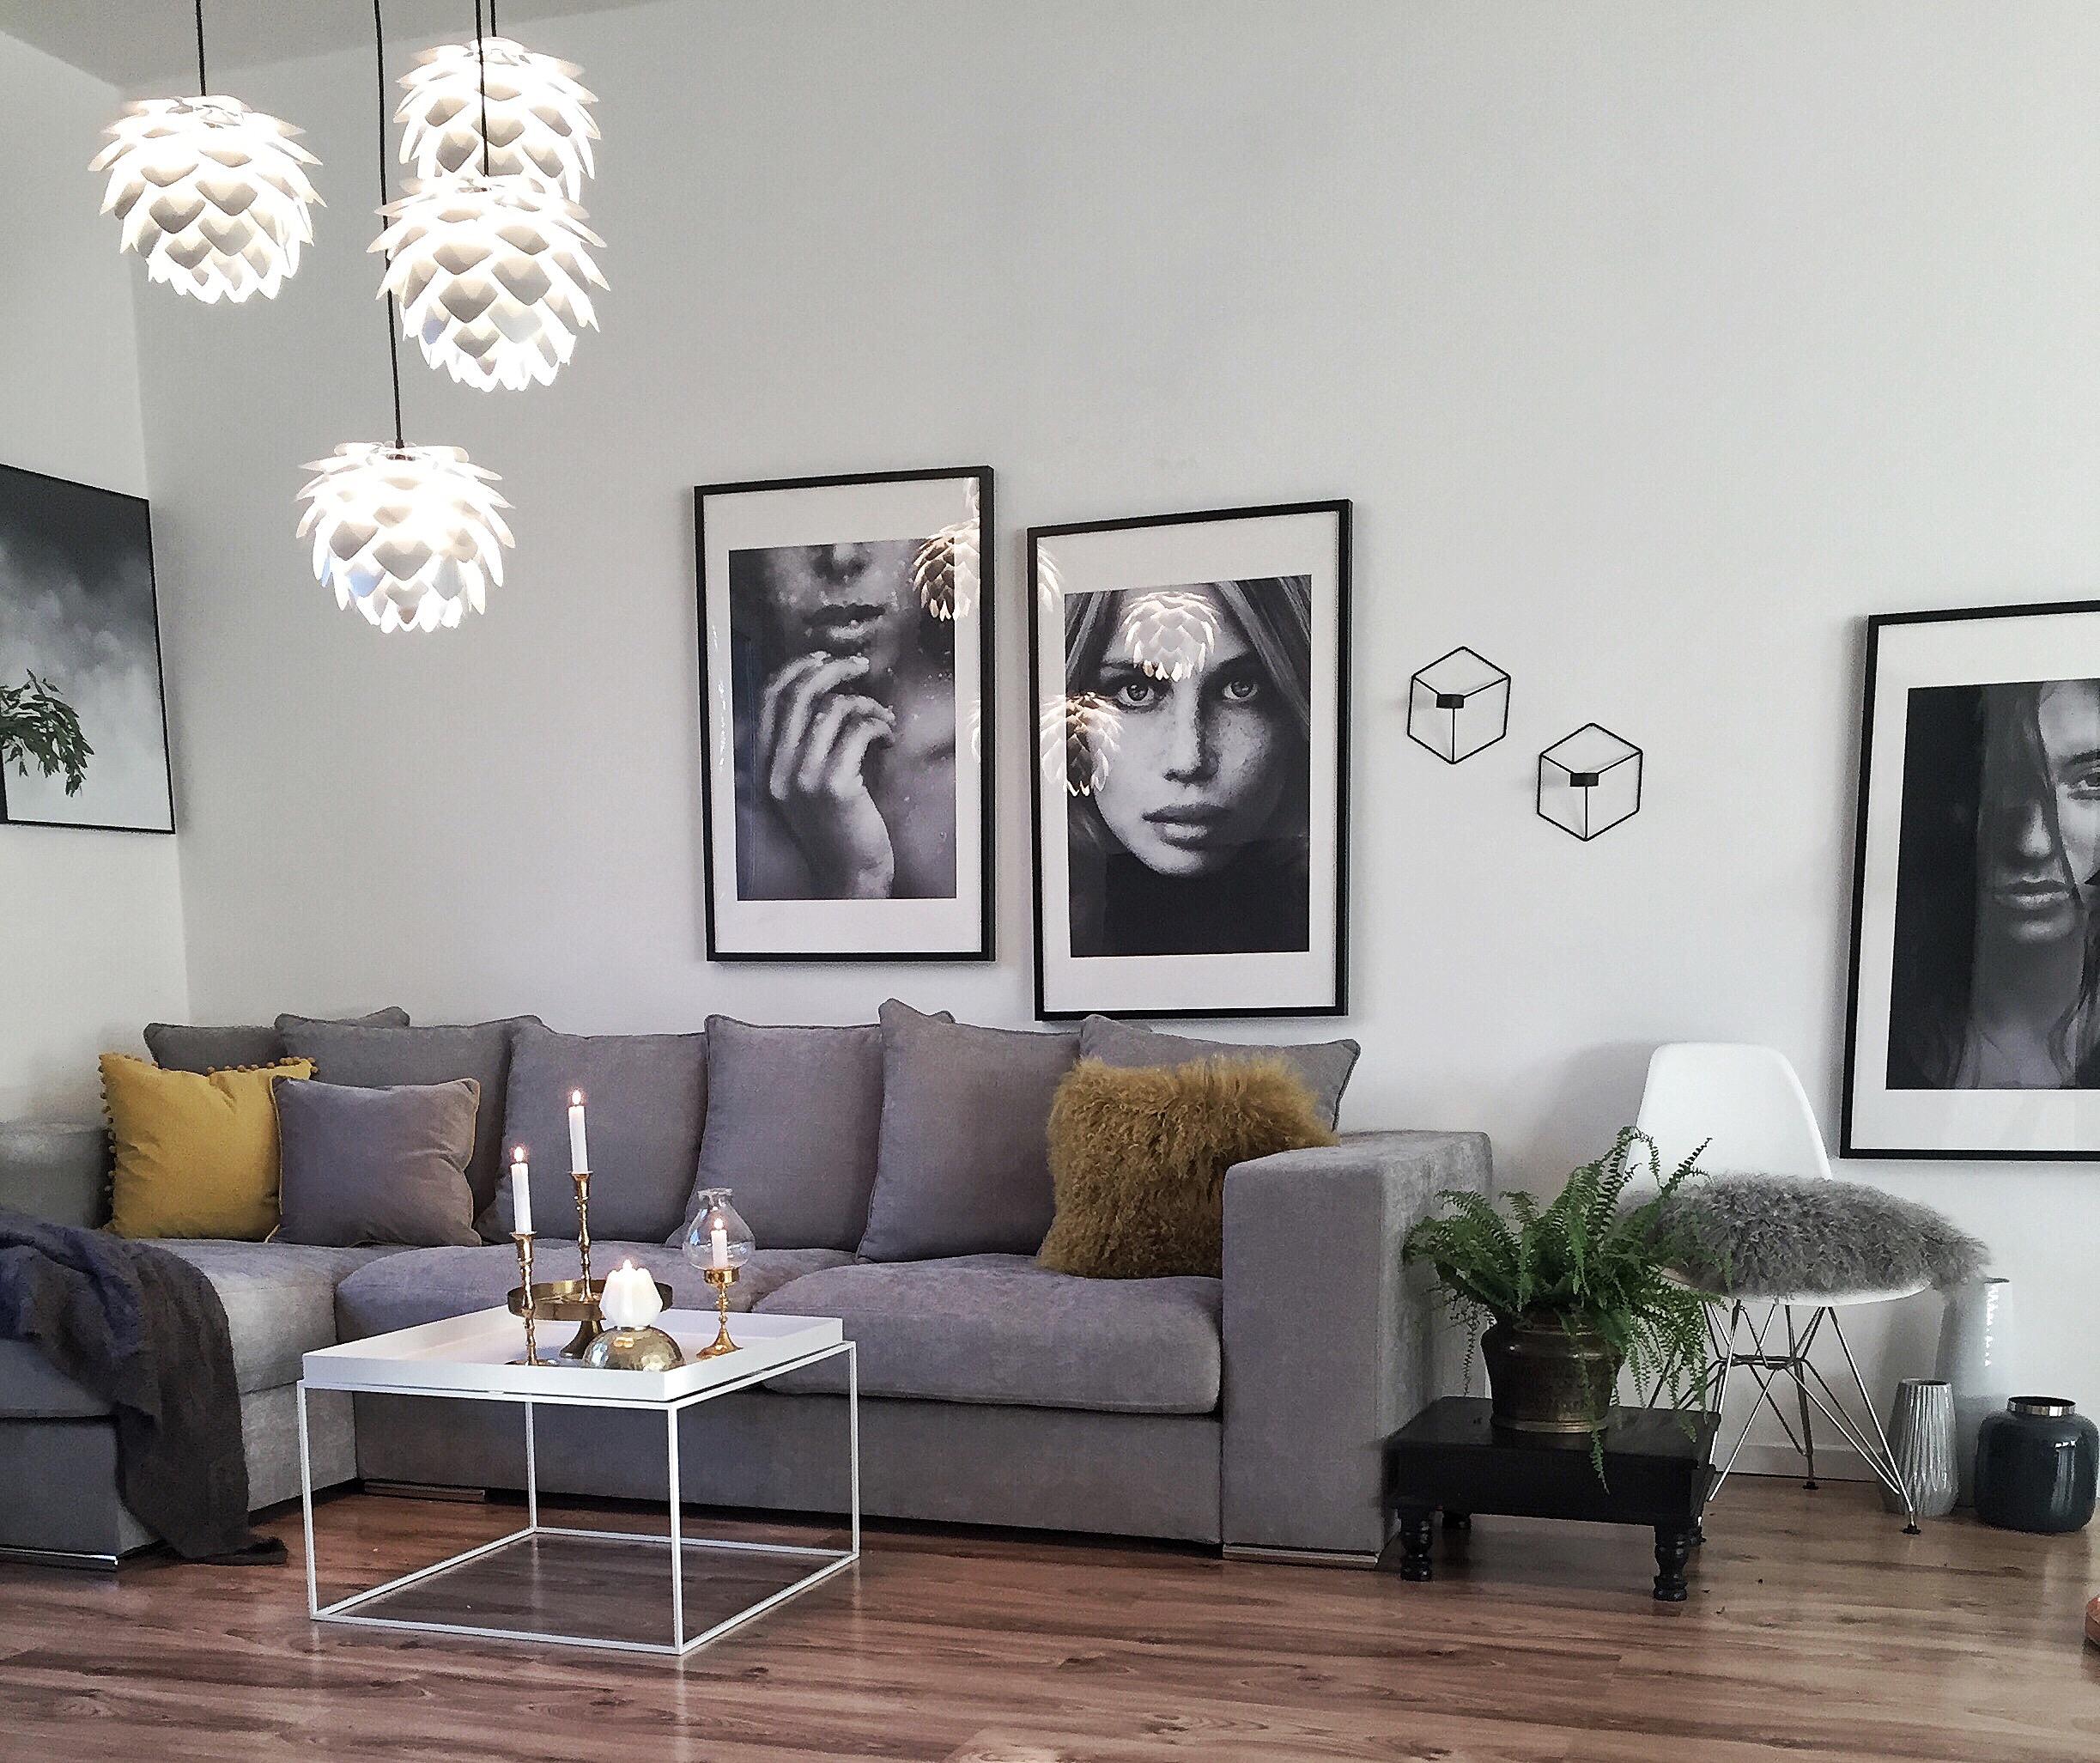 Sofa 'Newman' im Wohnzimmer der Bloggerin easyinterieur #ecksofa #sofa ©Amaris Elements